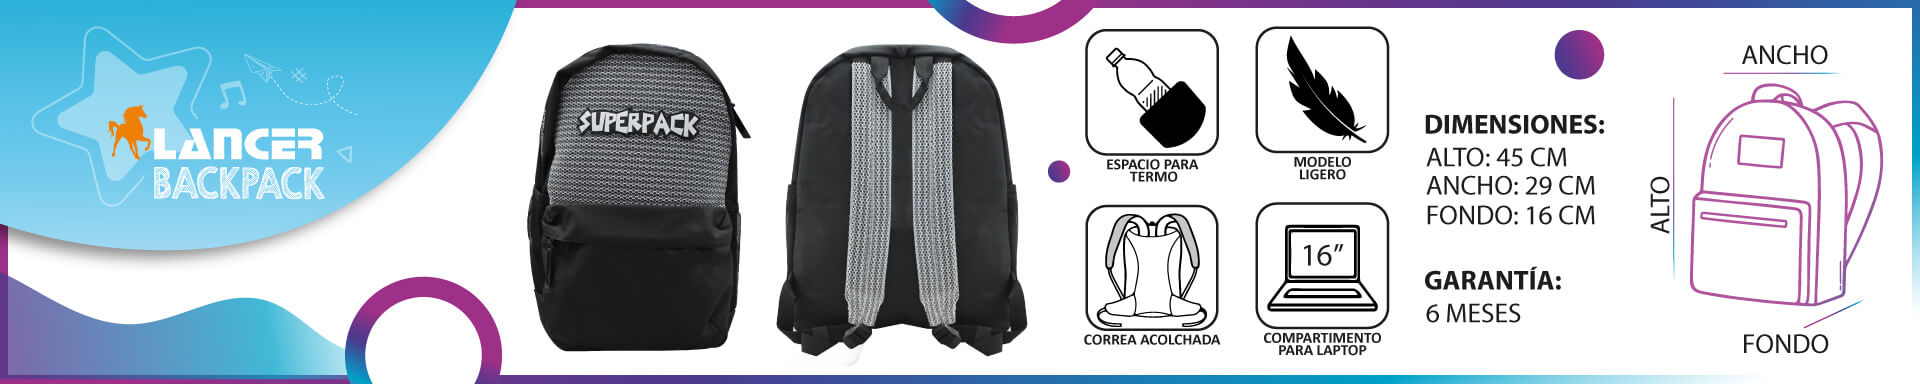 La mochila Lancer BackPack portátil perfecta para la oficina o clases